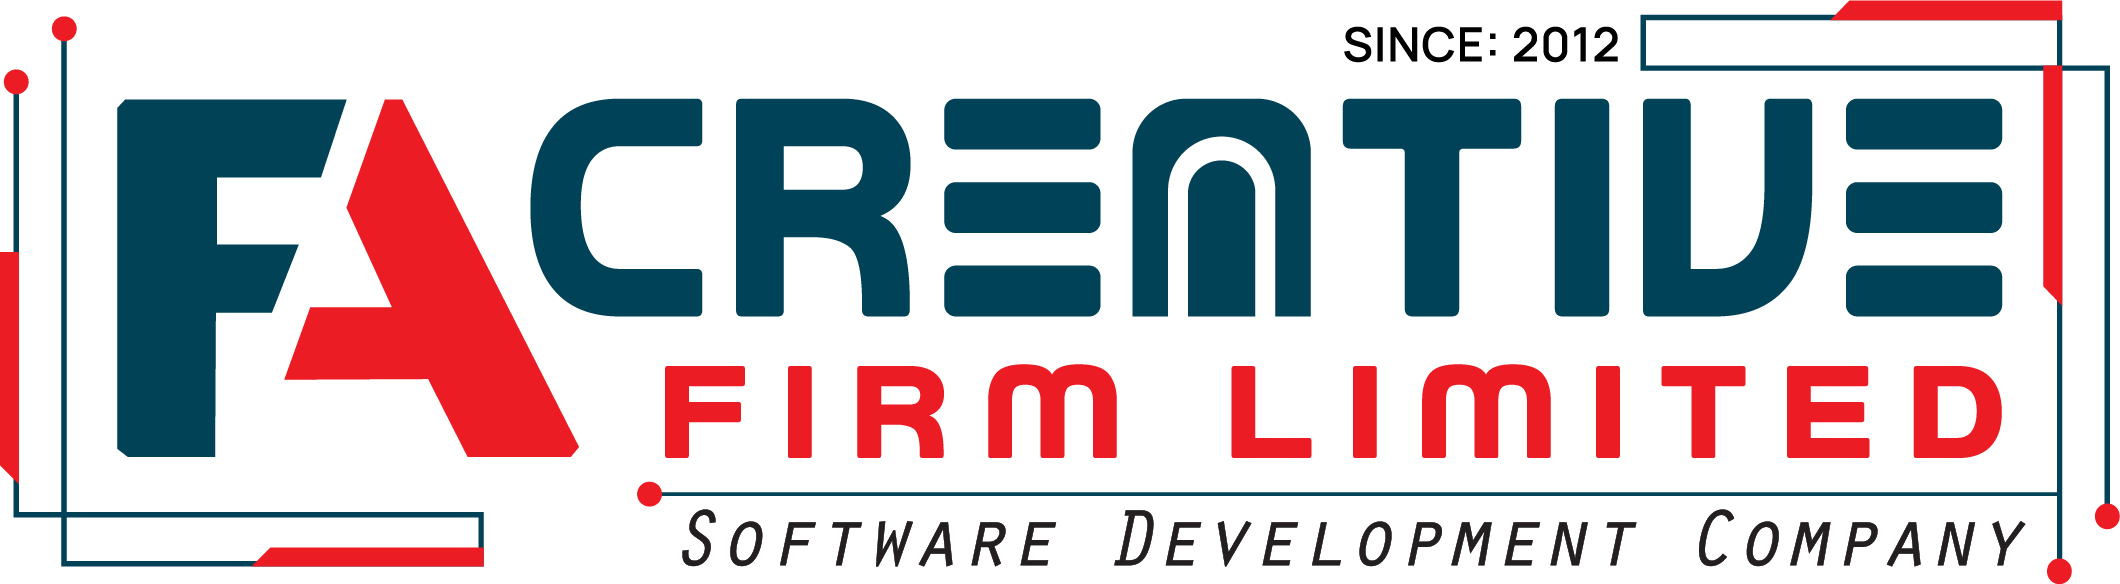 FA Creative Firm Ltd Logo